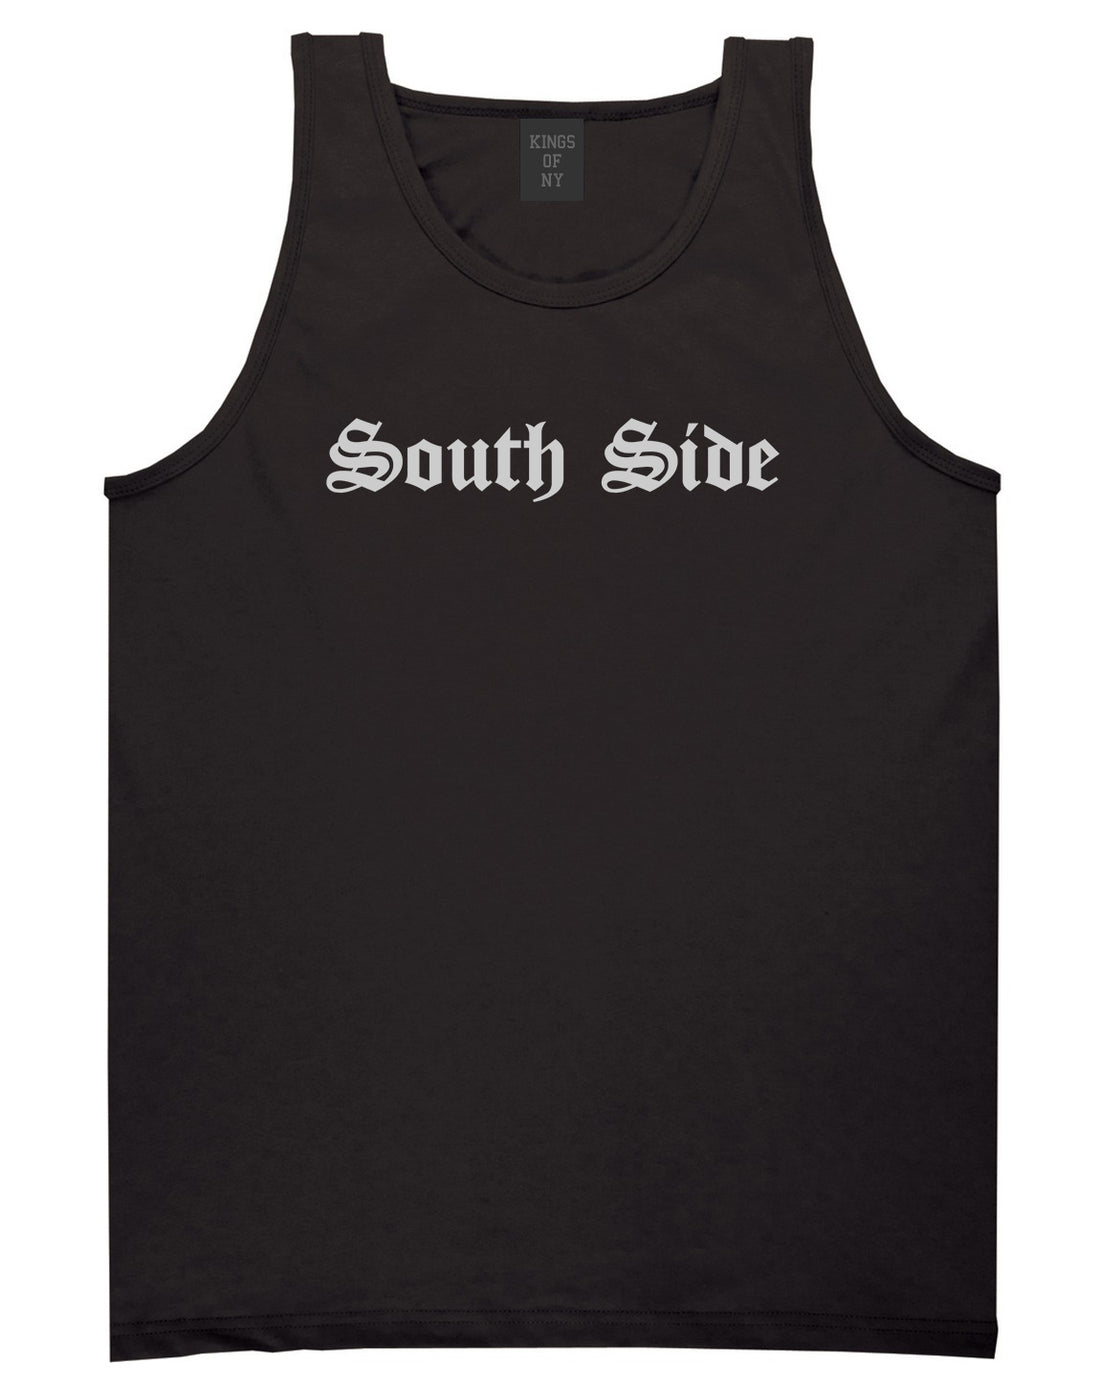 South Side Old English Mens Tank Top T-Shirt Black